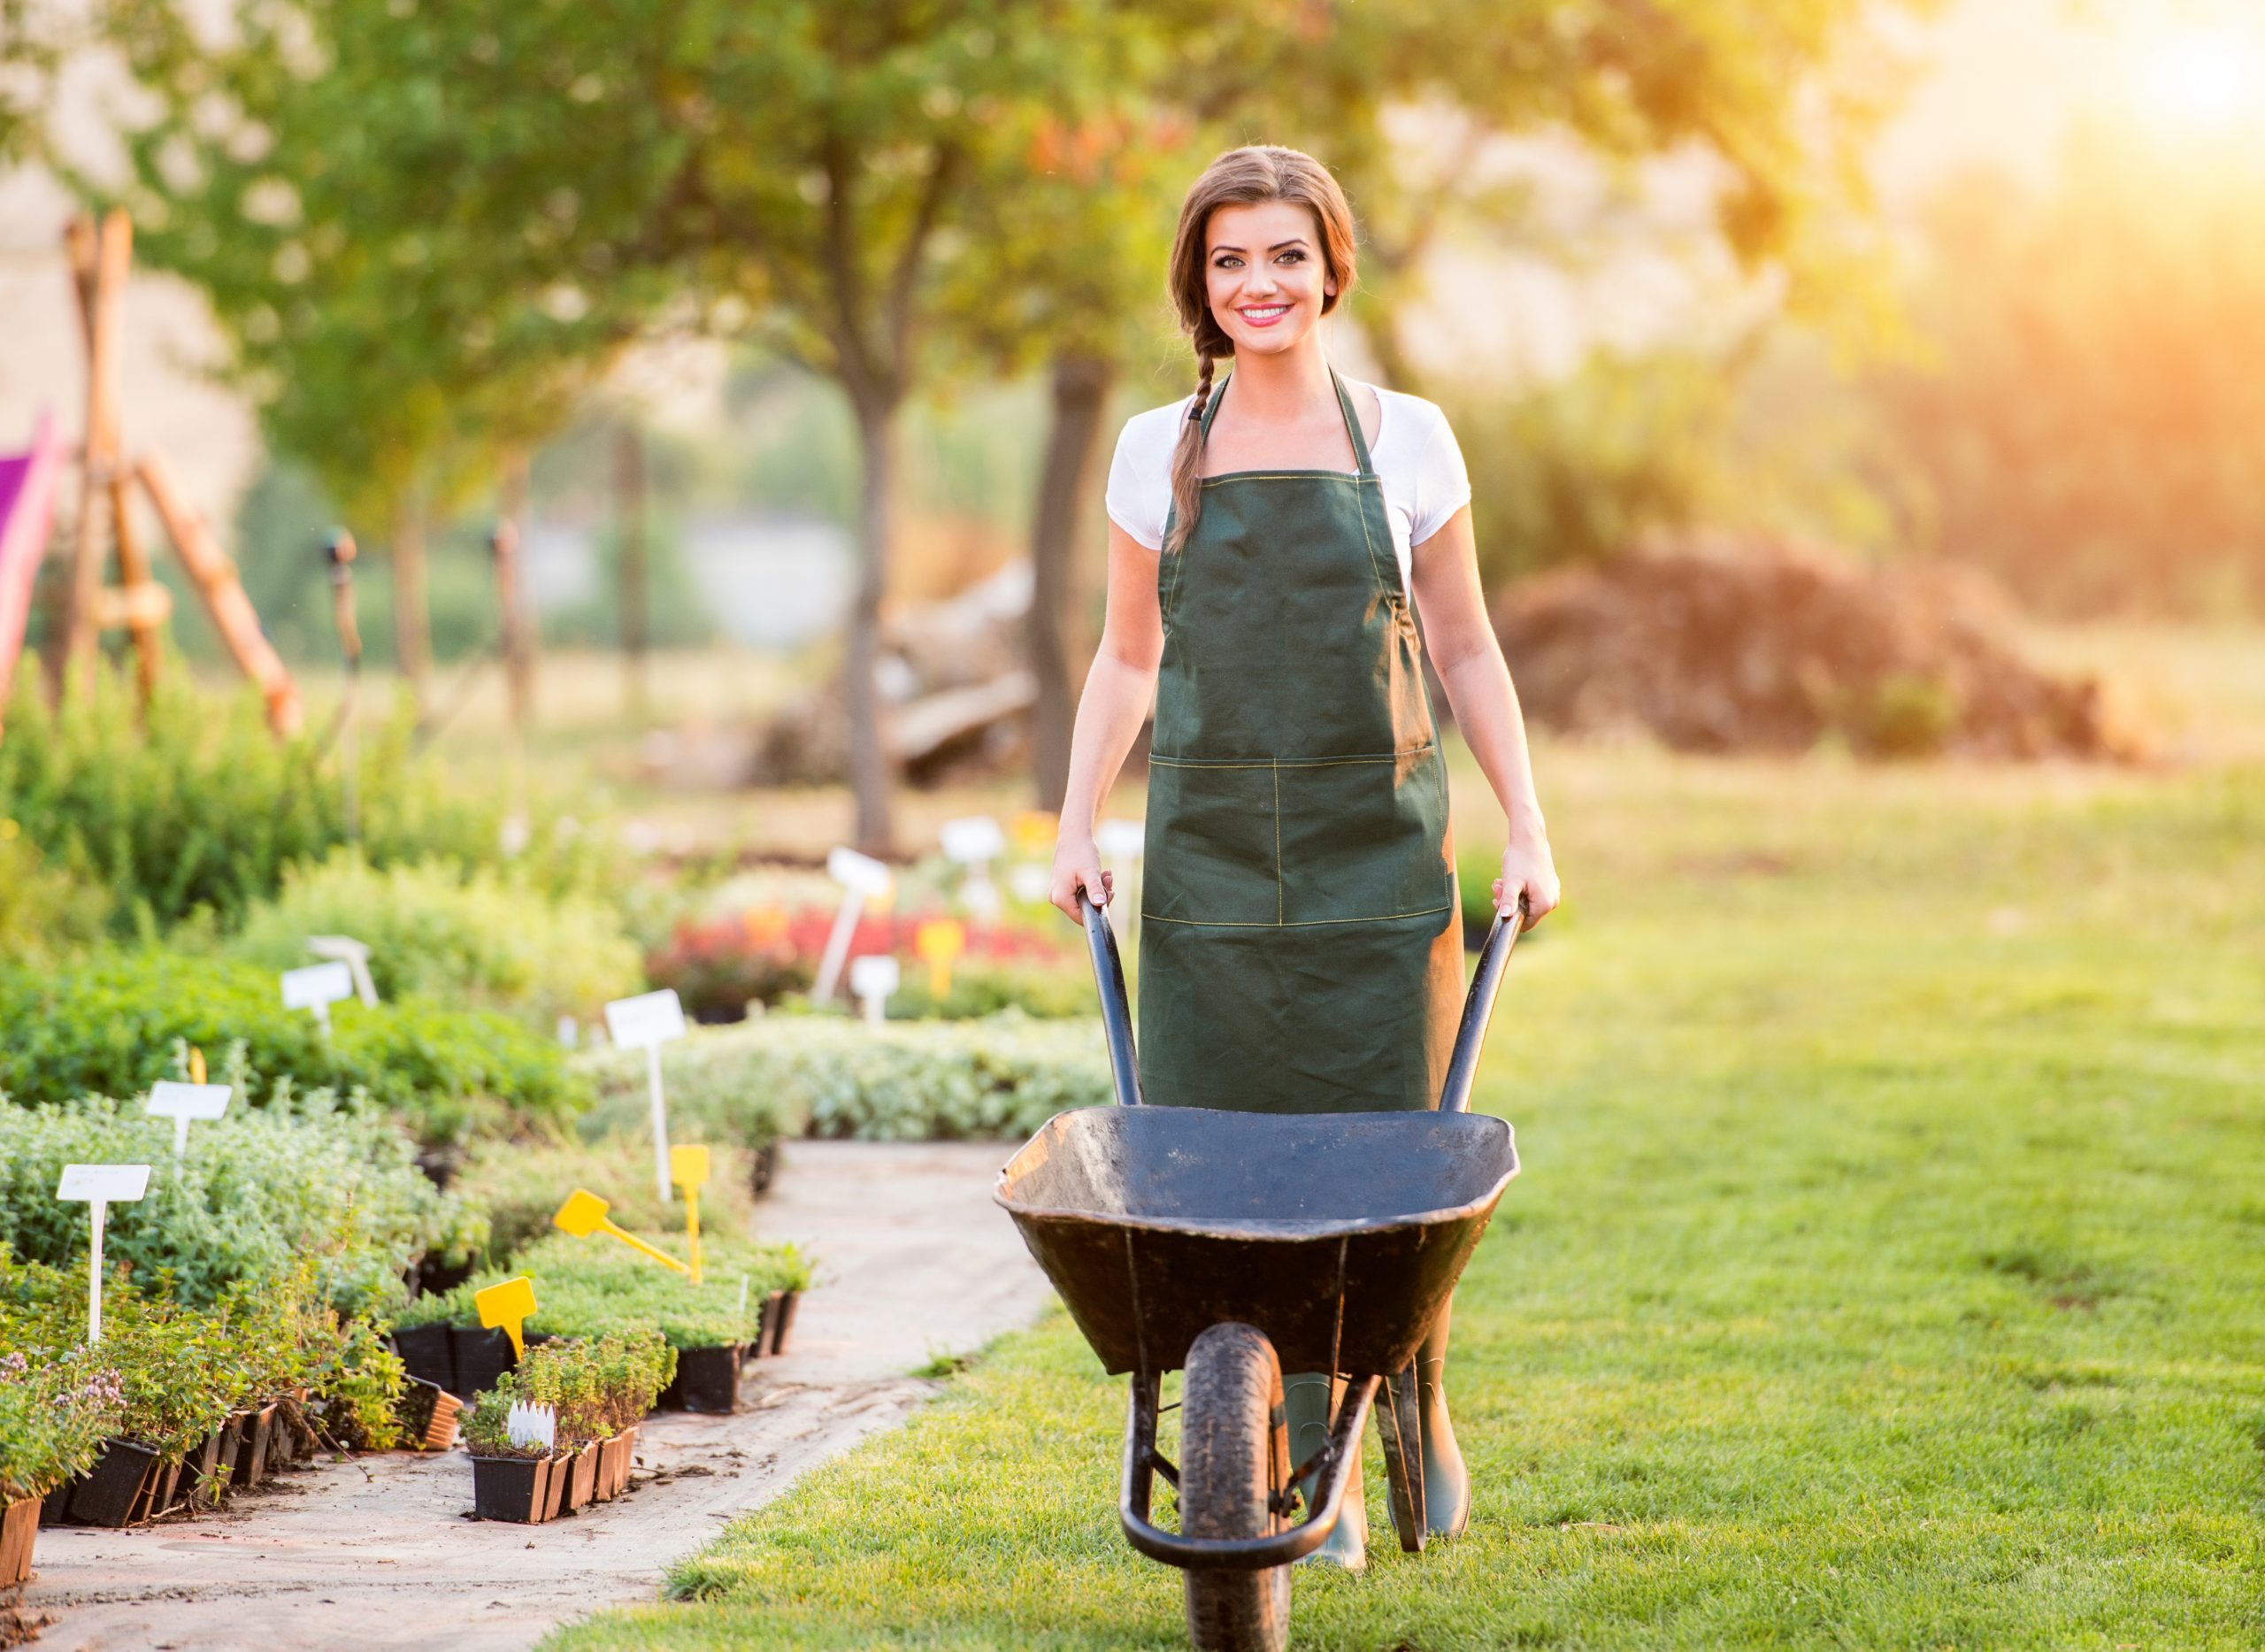 5 Ways to Make Your Yard Look Beautiful